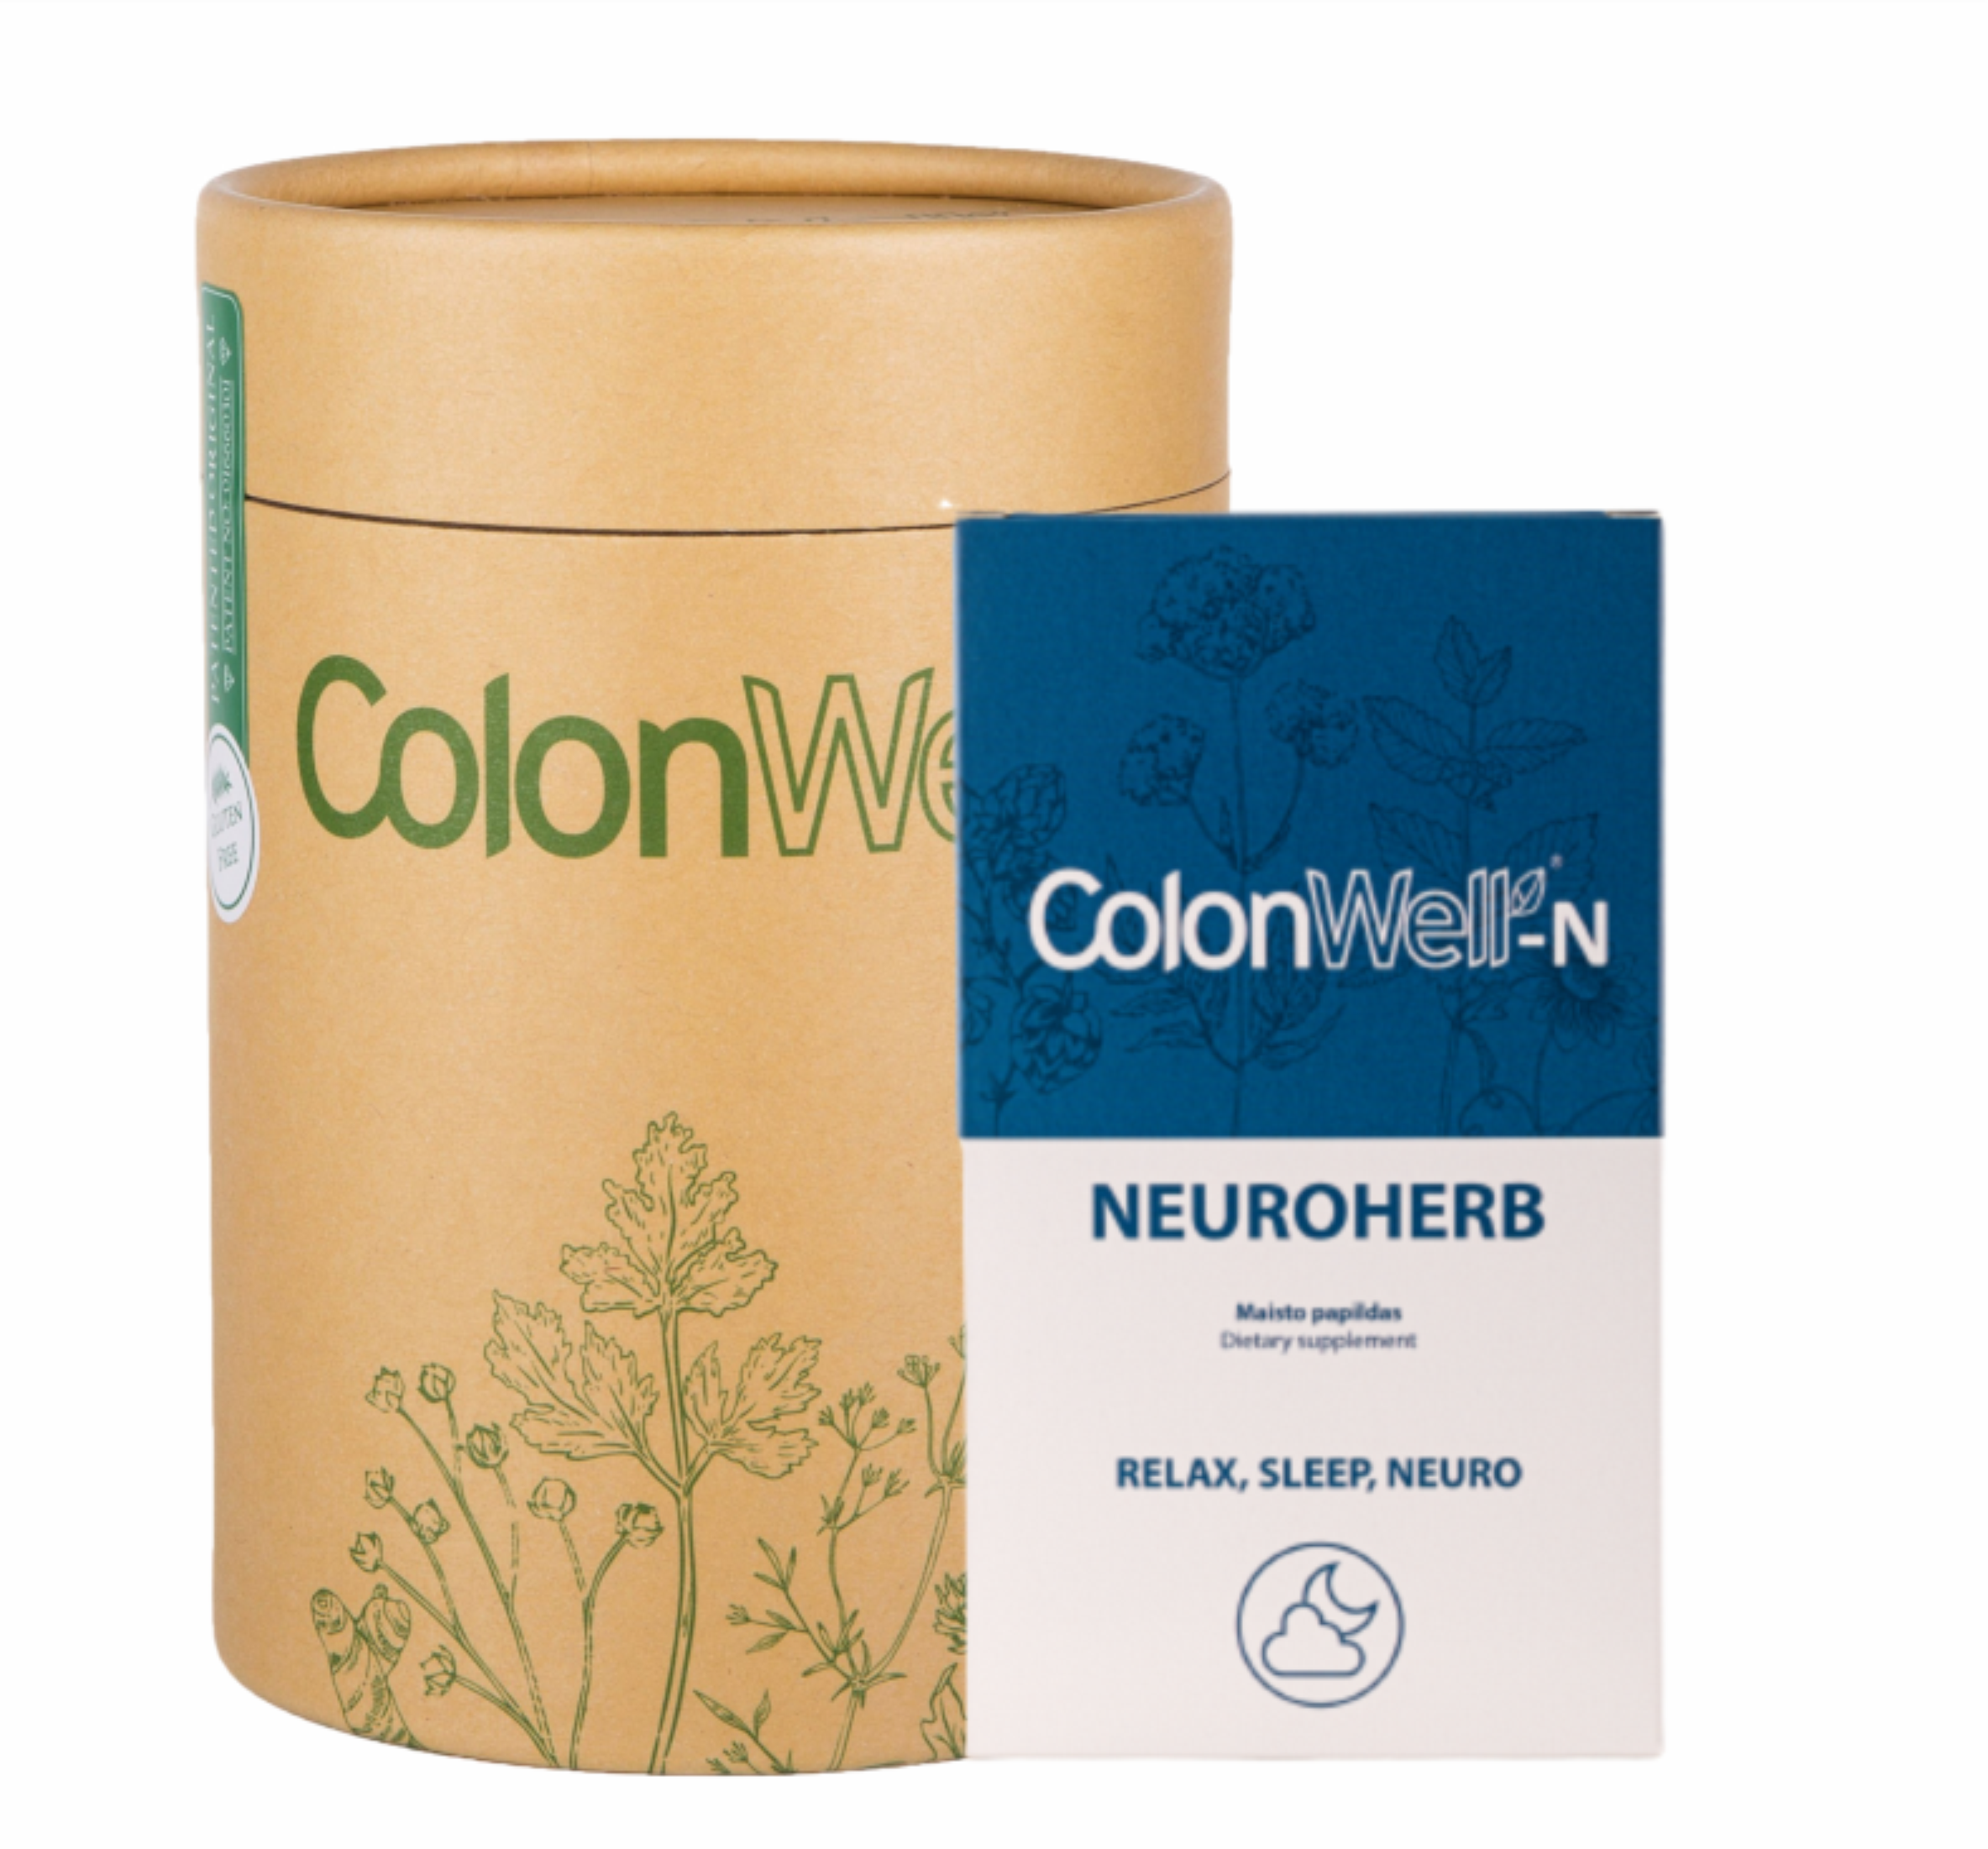 Colonwell.lt produktas - ColonWell (natūralaus skonio) 400g. + Neuroherb - maisto papildas (miegui, nervų sistemai)